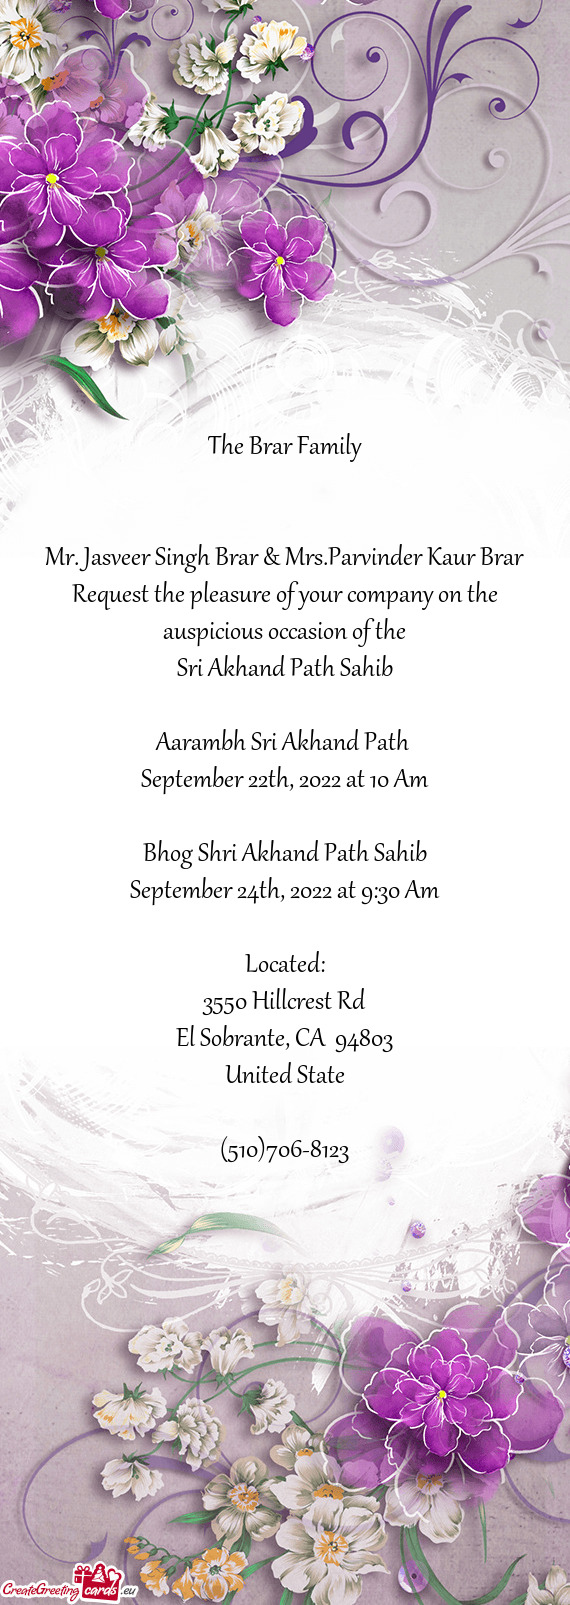 Mr. Jasveer Singh Brar & Mrs.Parvinder Kaur Brar